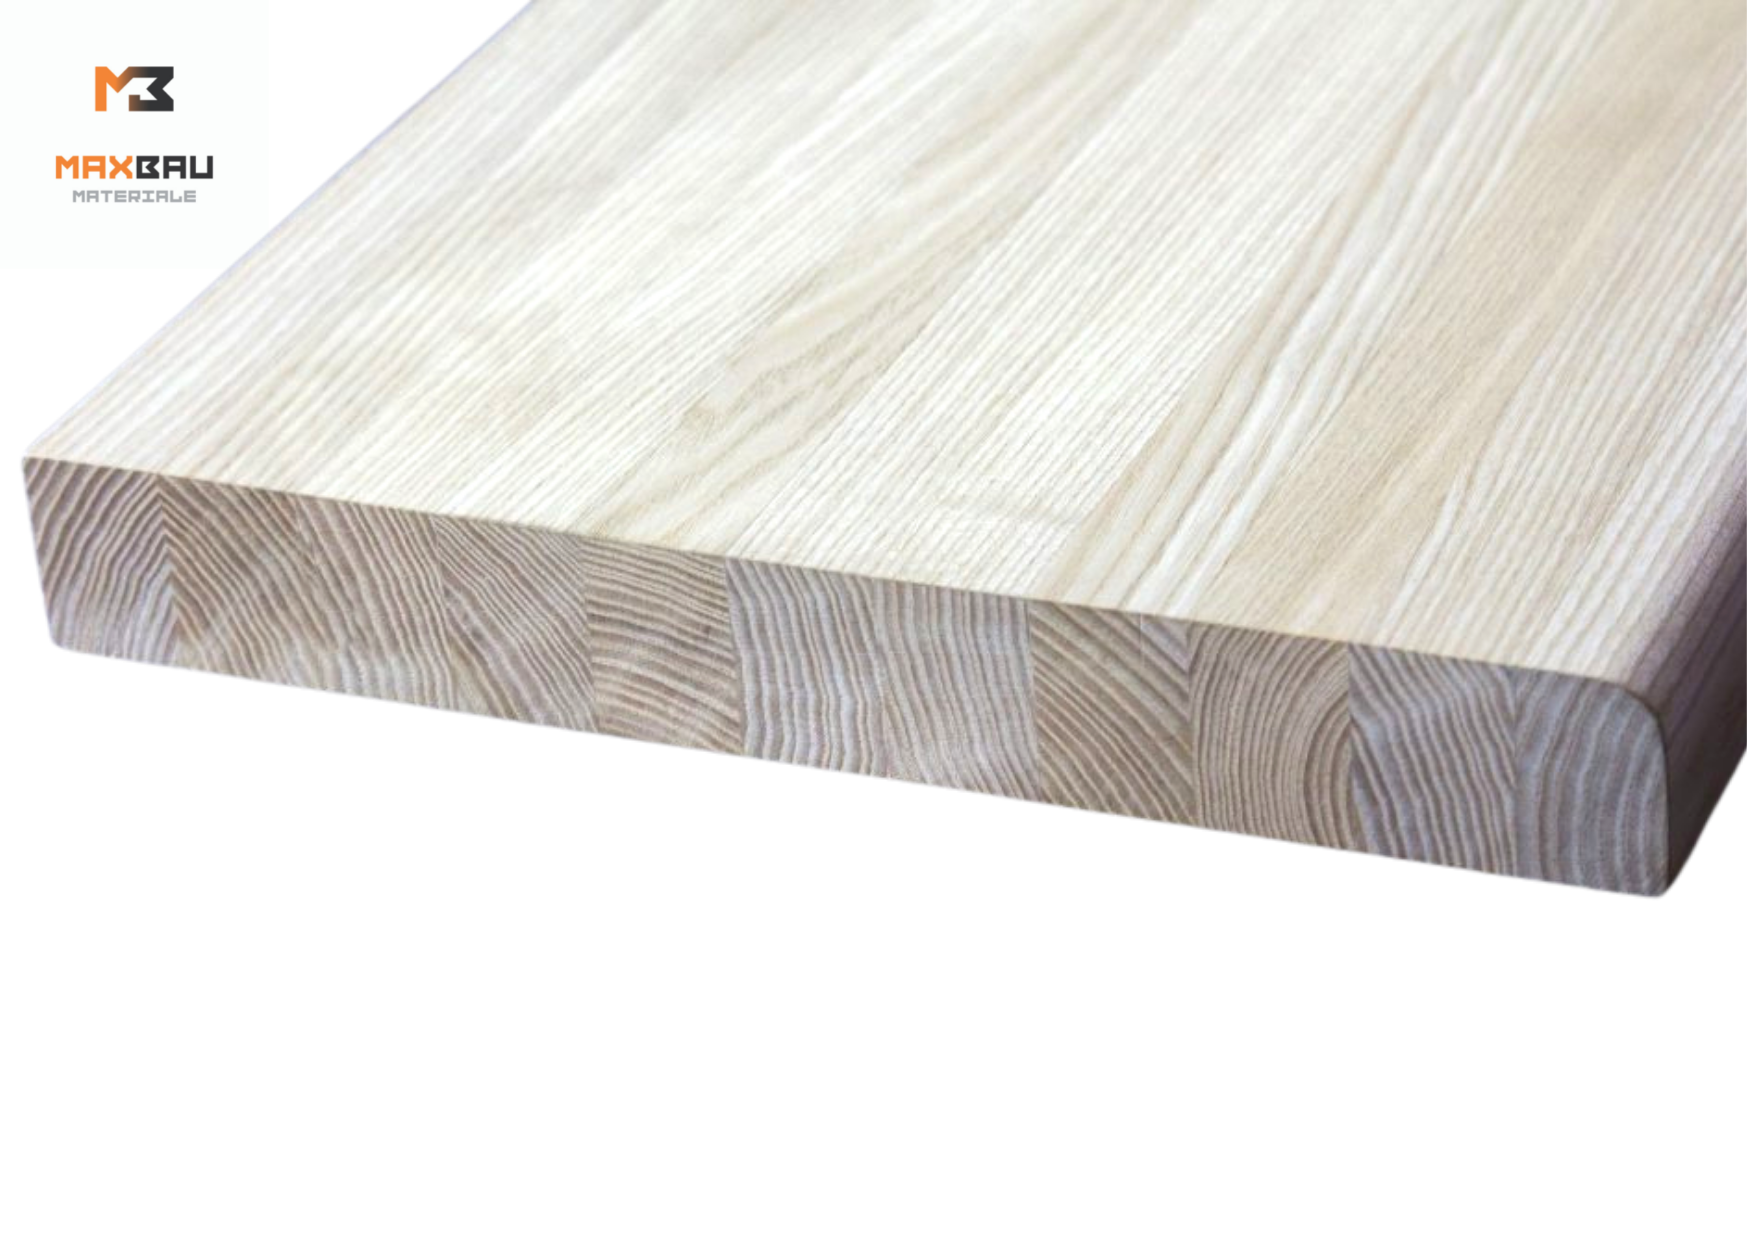 Placi din lemn incleiat - Placa de lemn incleiat MaxBau 2500 x 250 x 28 mm Clasa AB, https:maxbau.ro